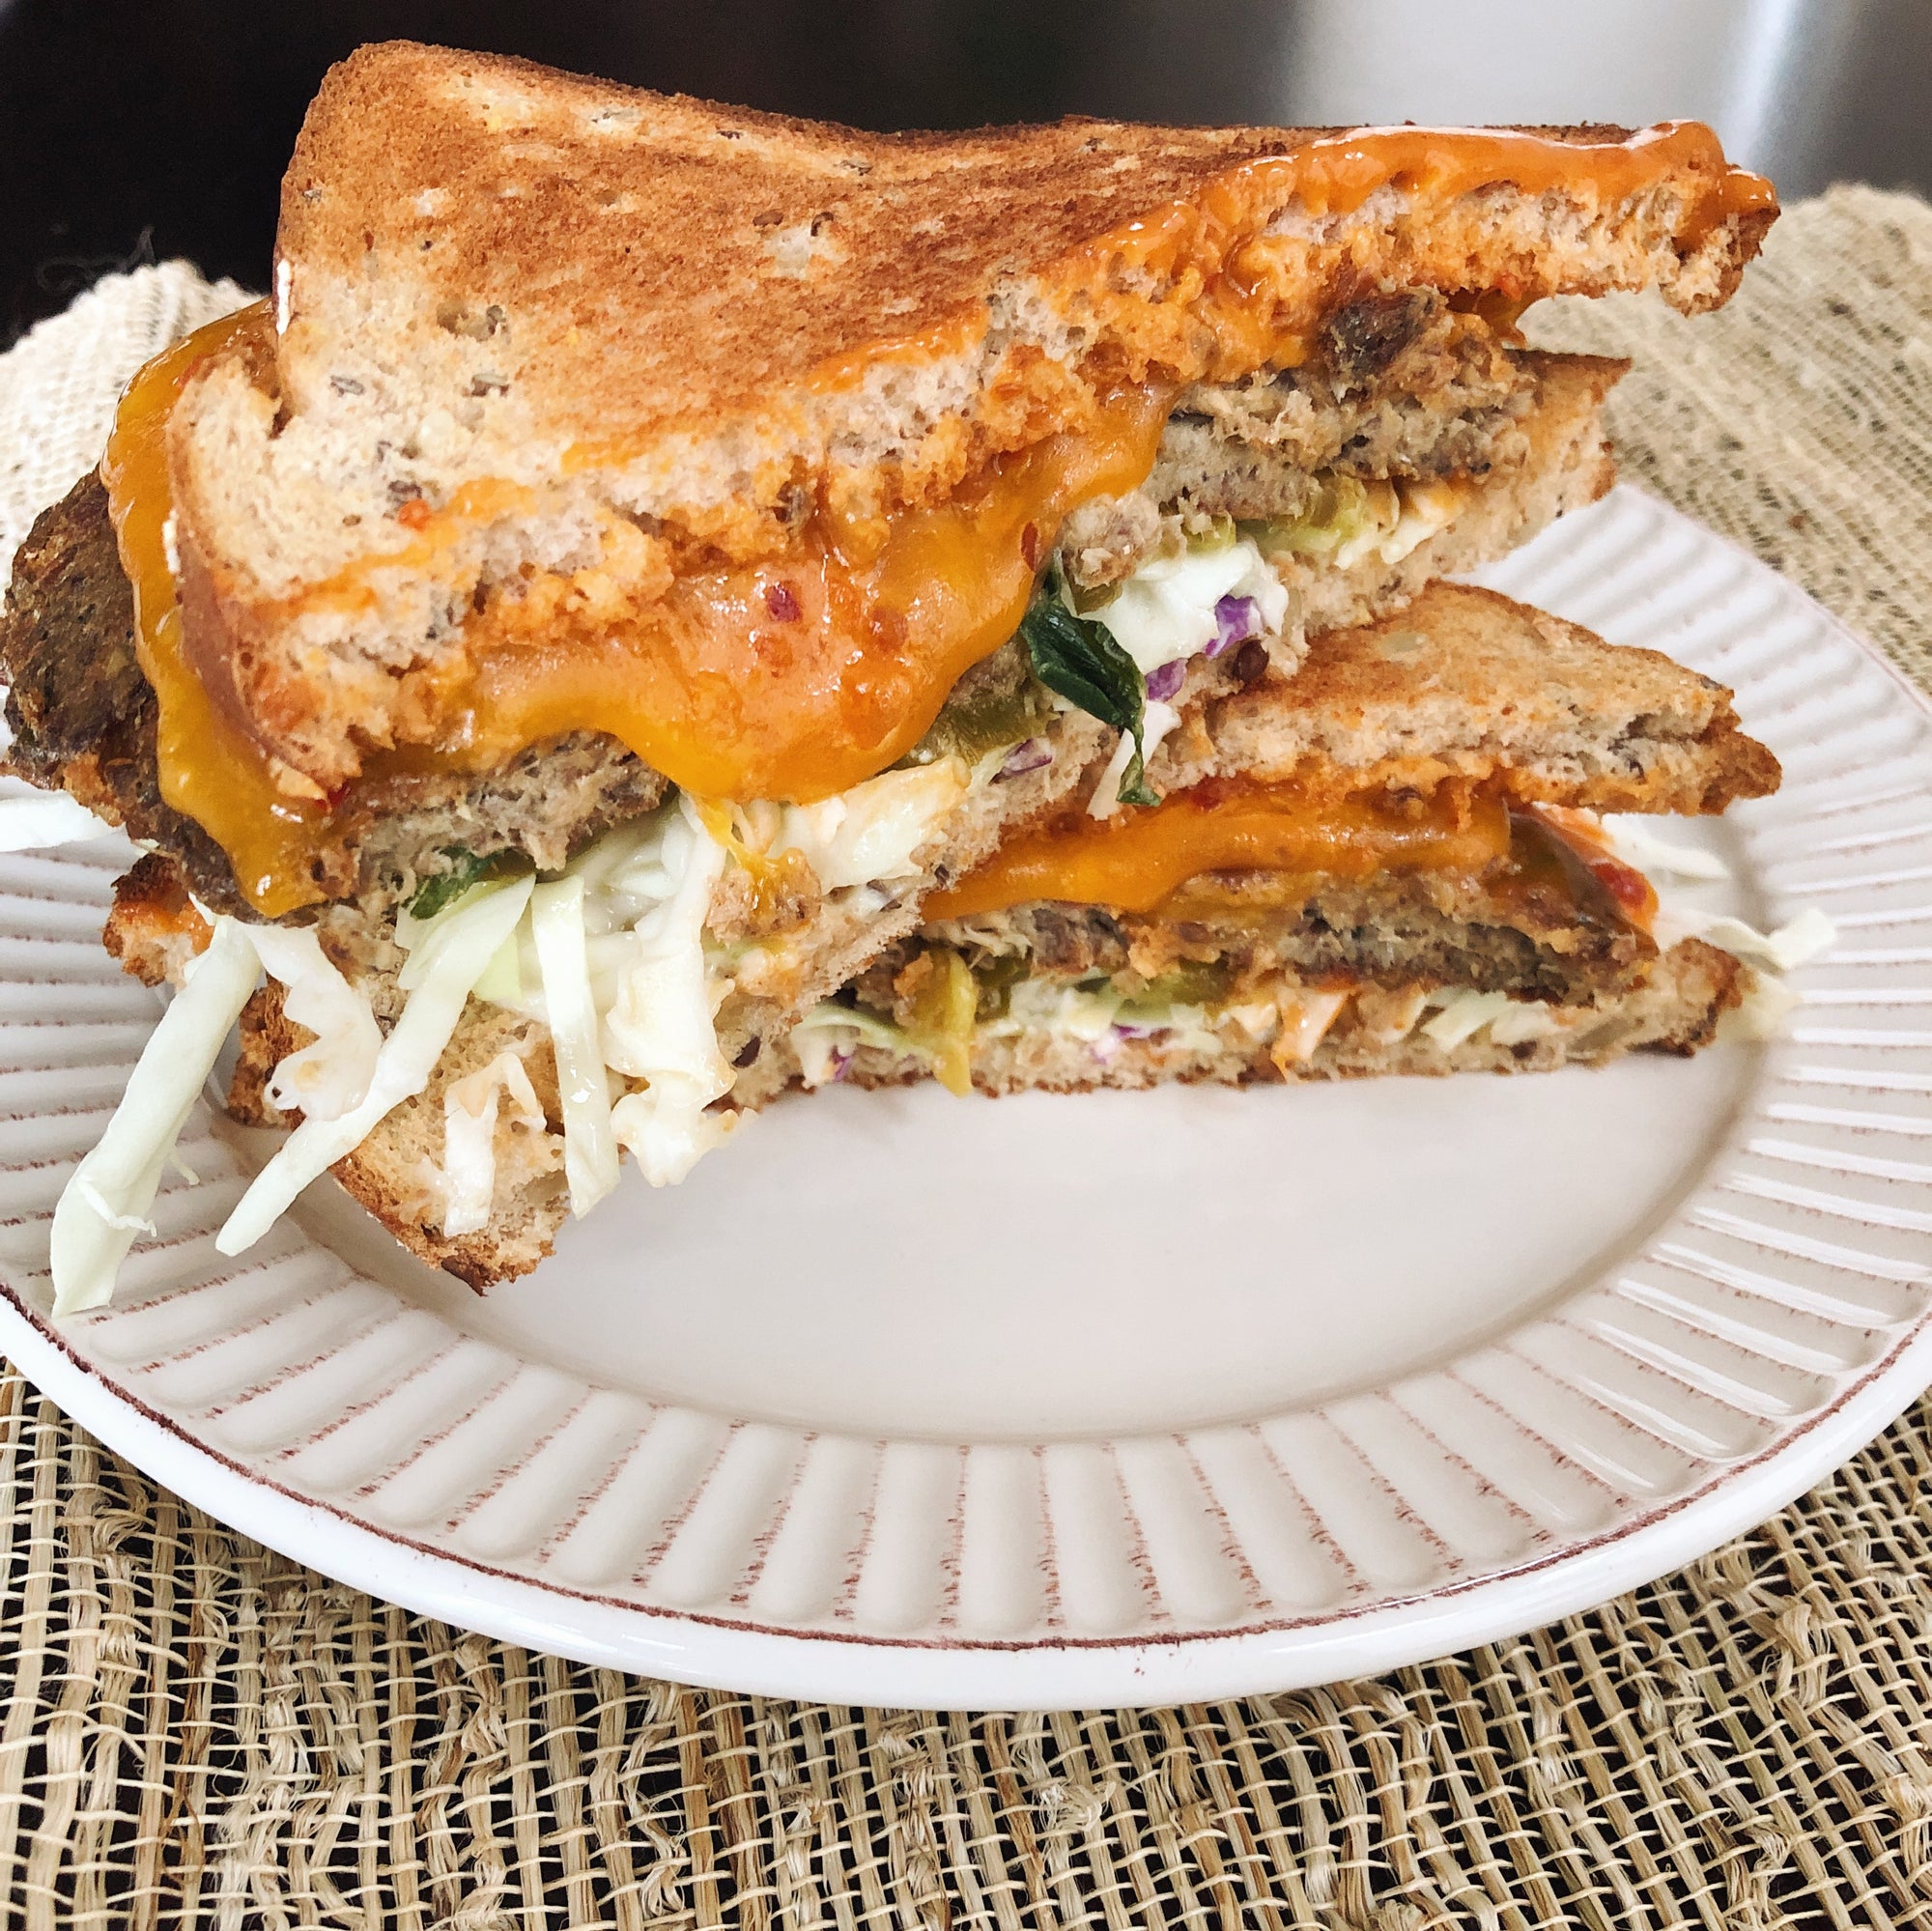 Sardine burger with slaw and bravas sauce - Donostia Foods